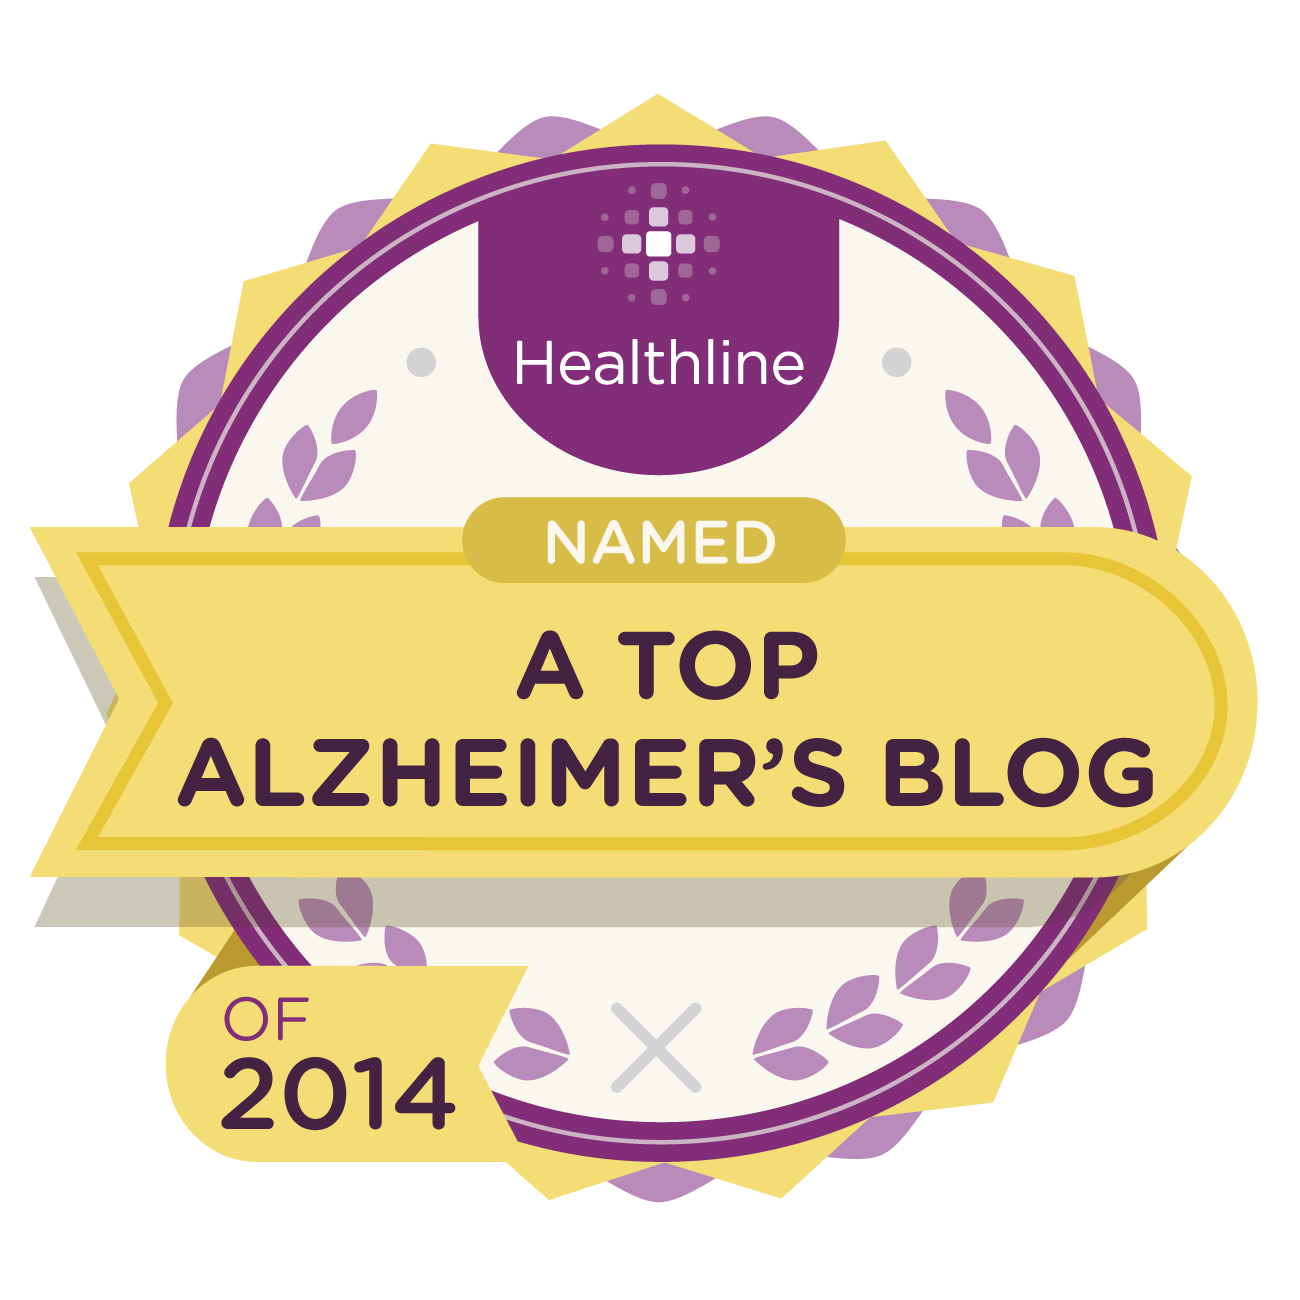 The 25 Best Alzheimer's Blogs of 2014